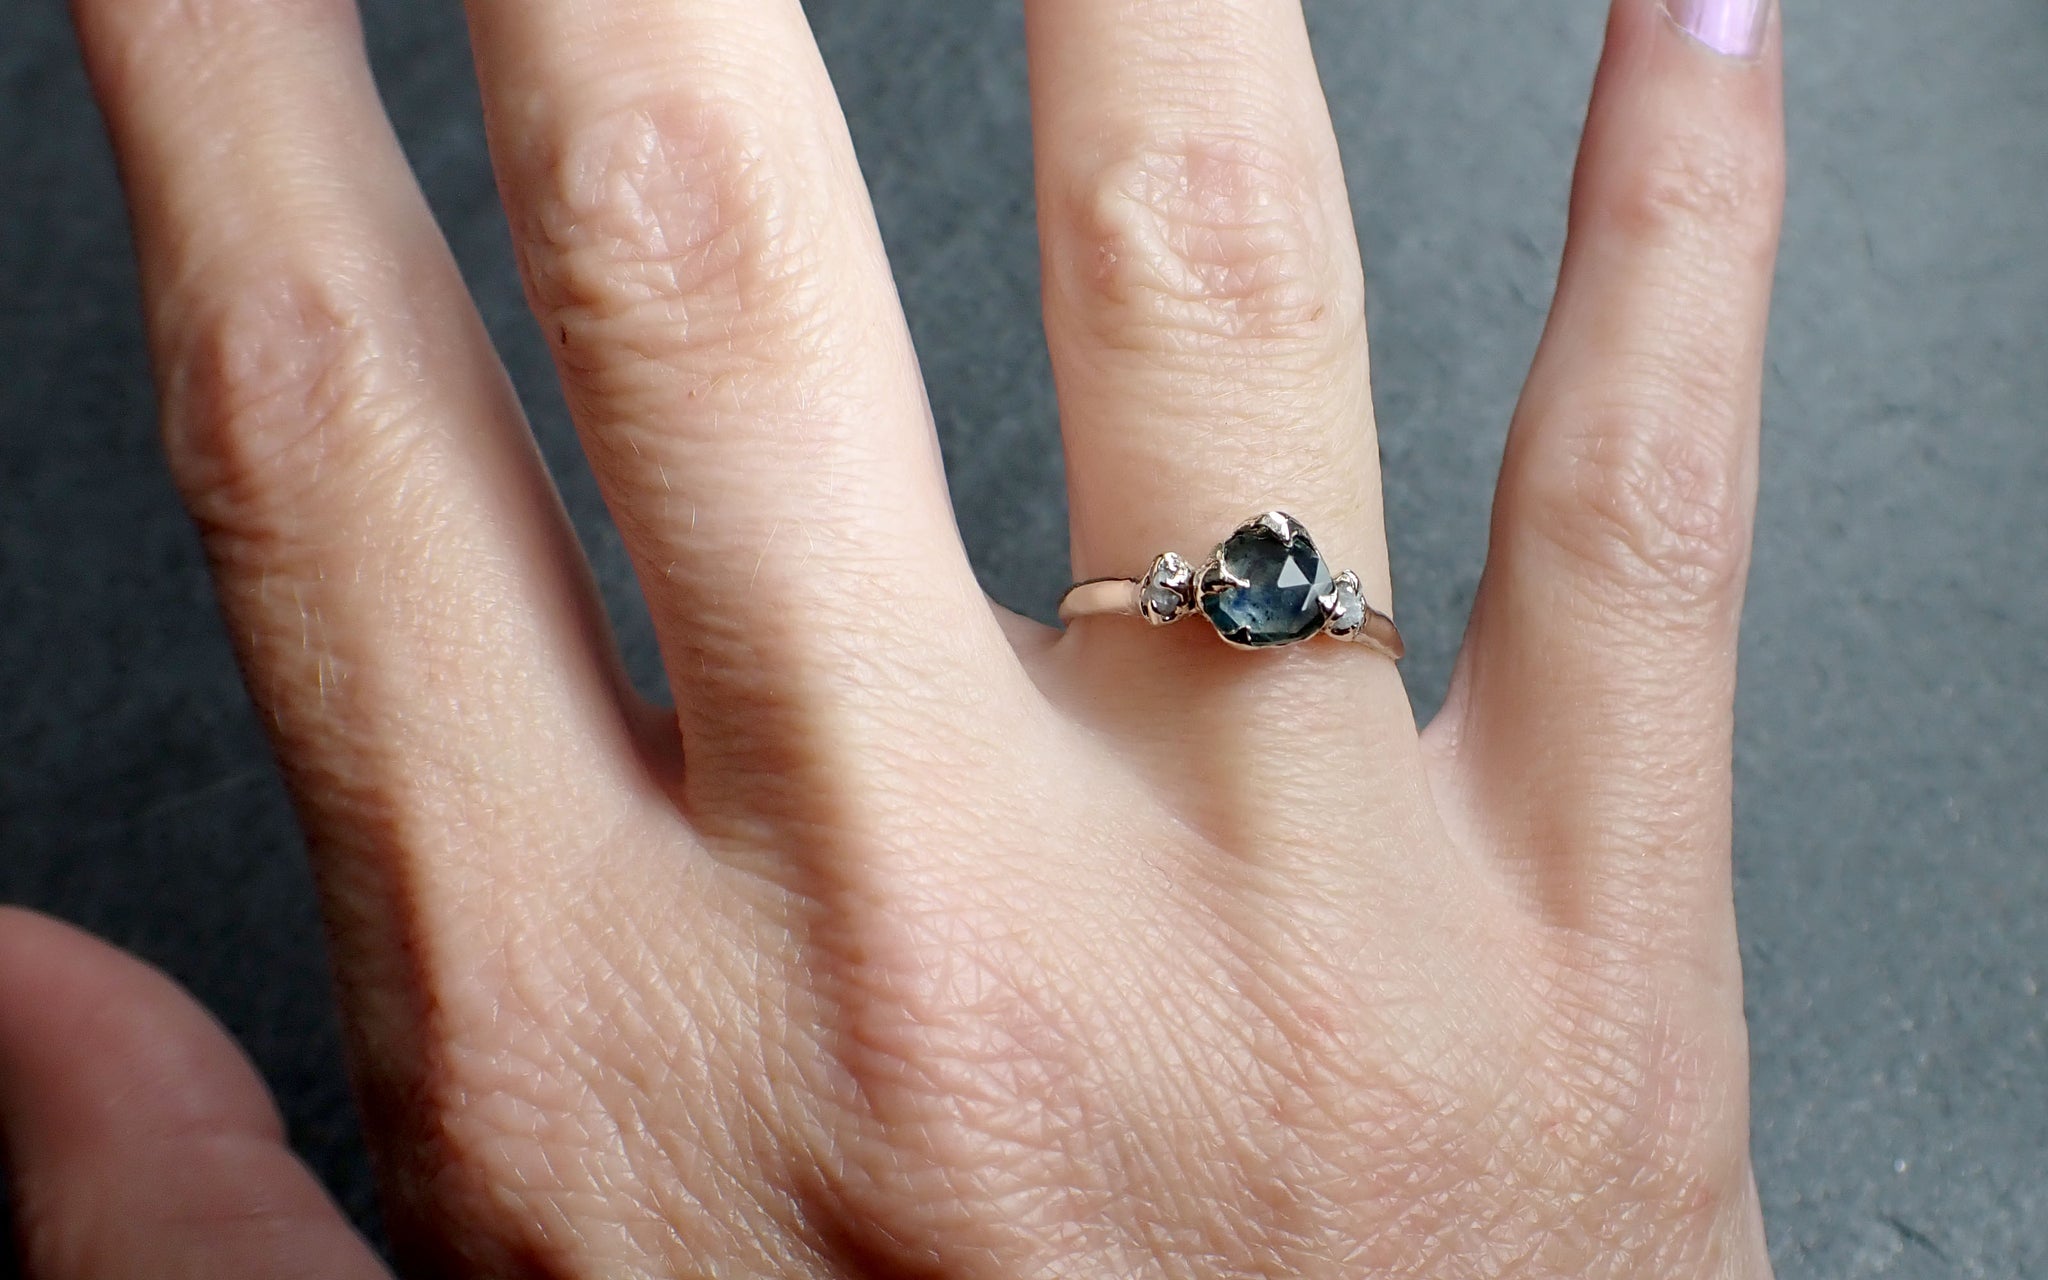 Fancy cut Montana Sapphire Diamond 14k White Gold Engagement Ring Wedding Ring blue Gemstone Ring Multi stone Ring 2575